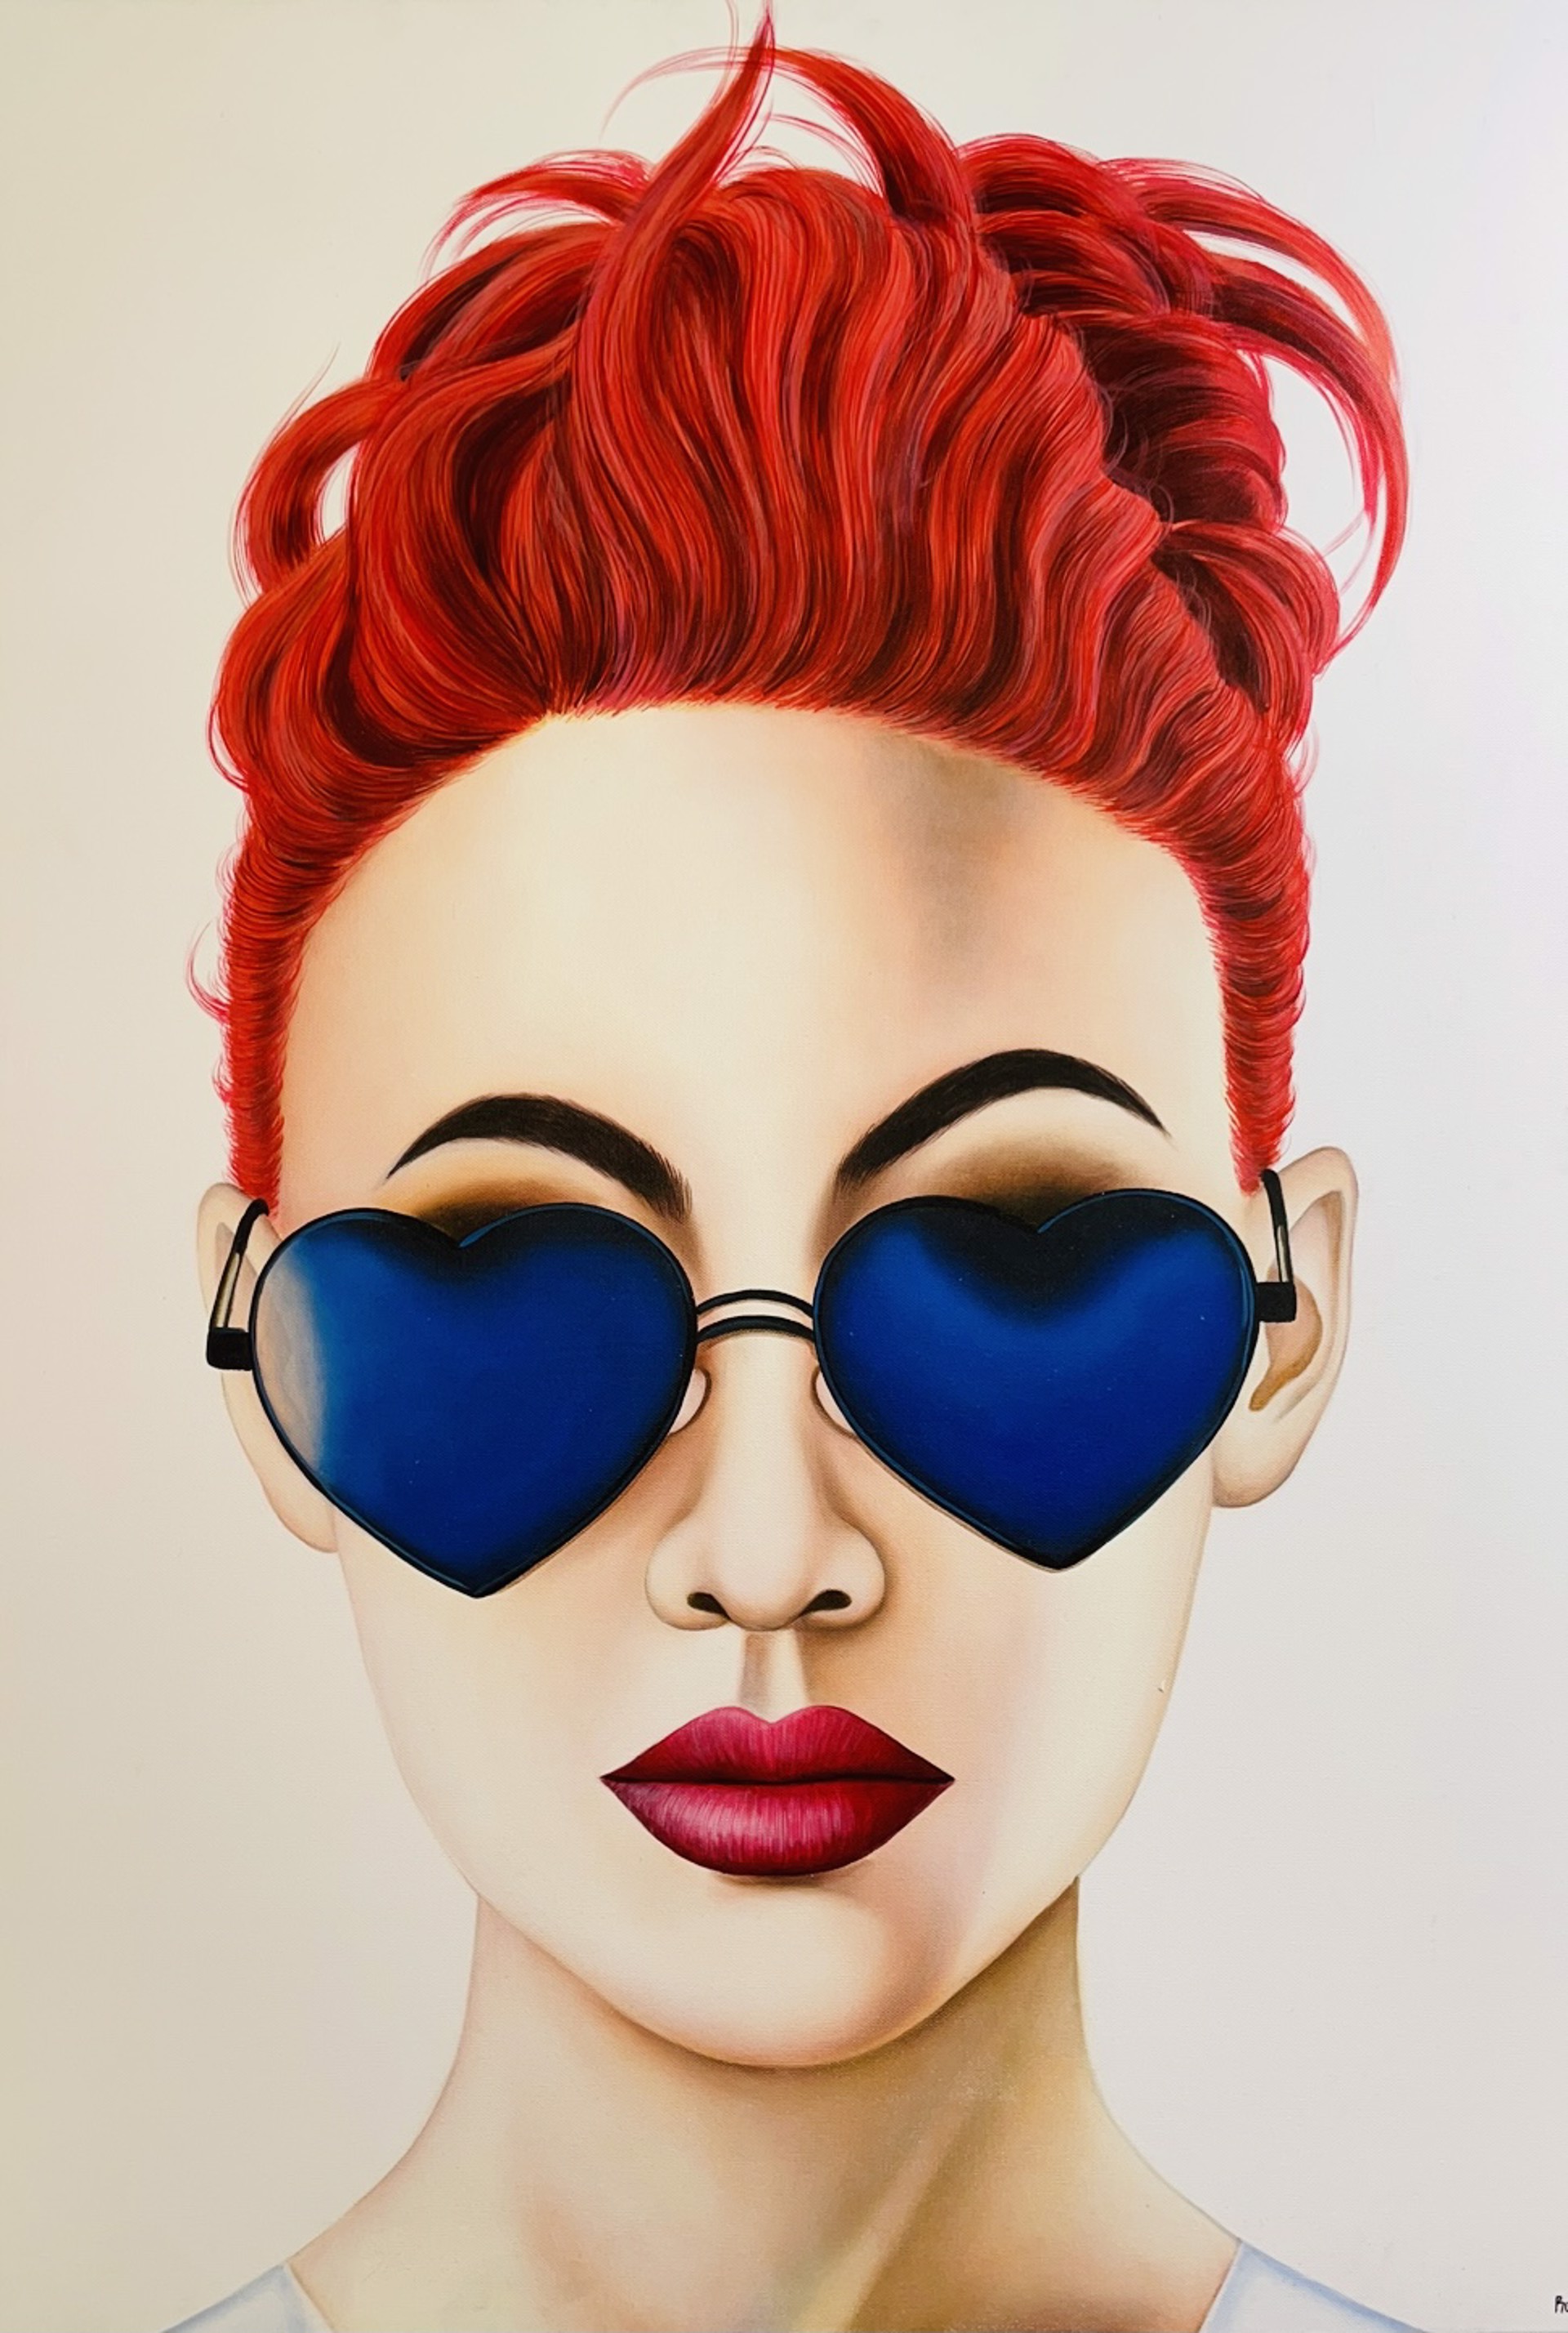 "Blue Sunglasses" by Roni M